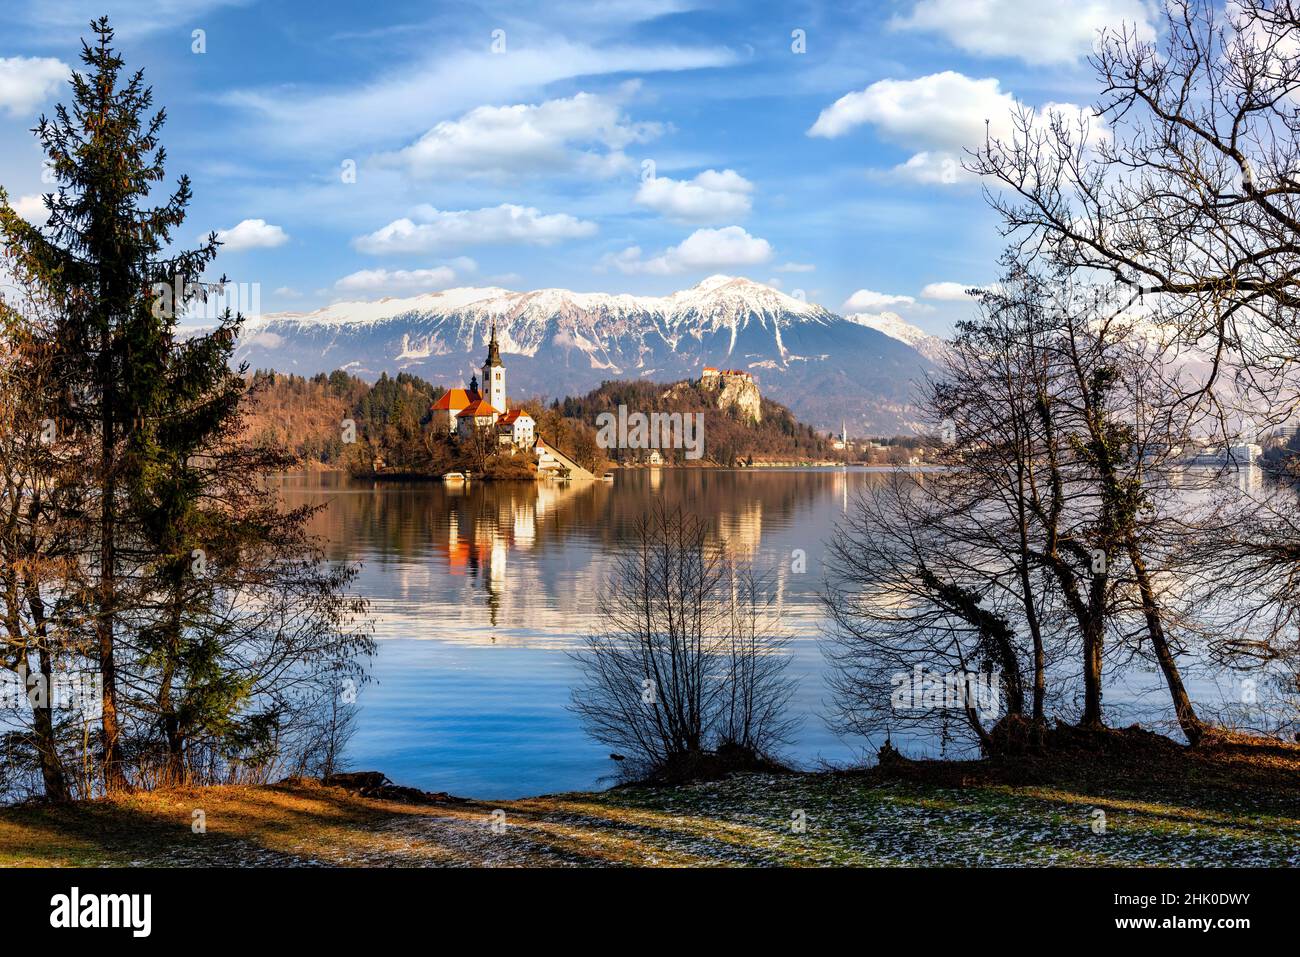 Lake Bled Slovenia. Beautiful mountain lake with small Pilgrimage Church. Stock Photo